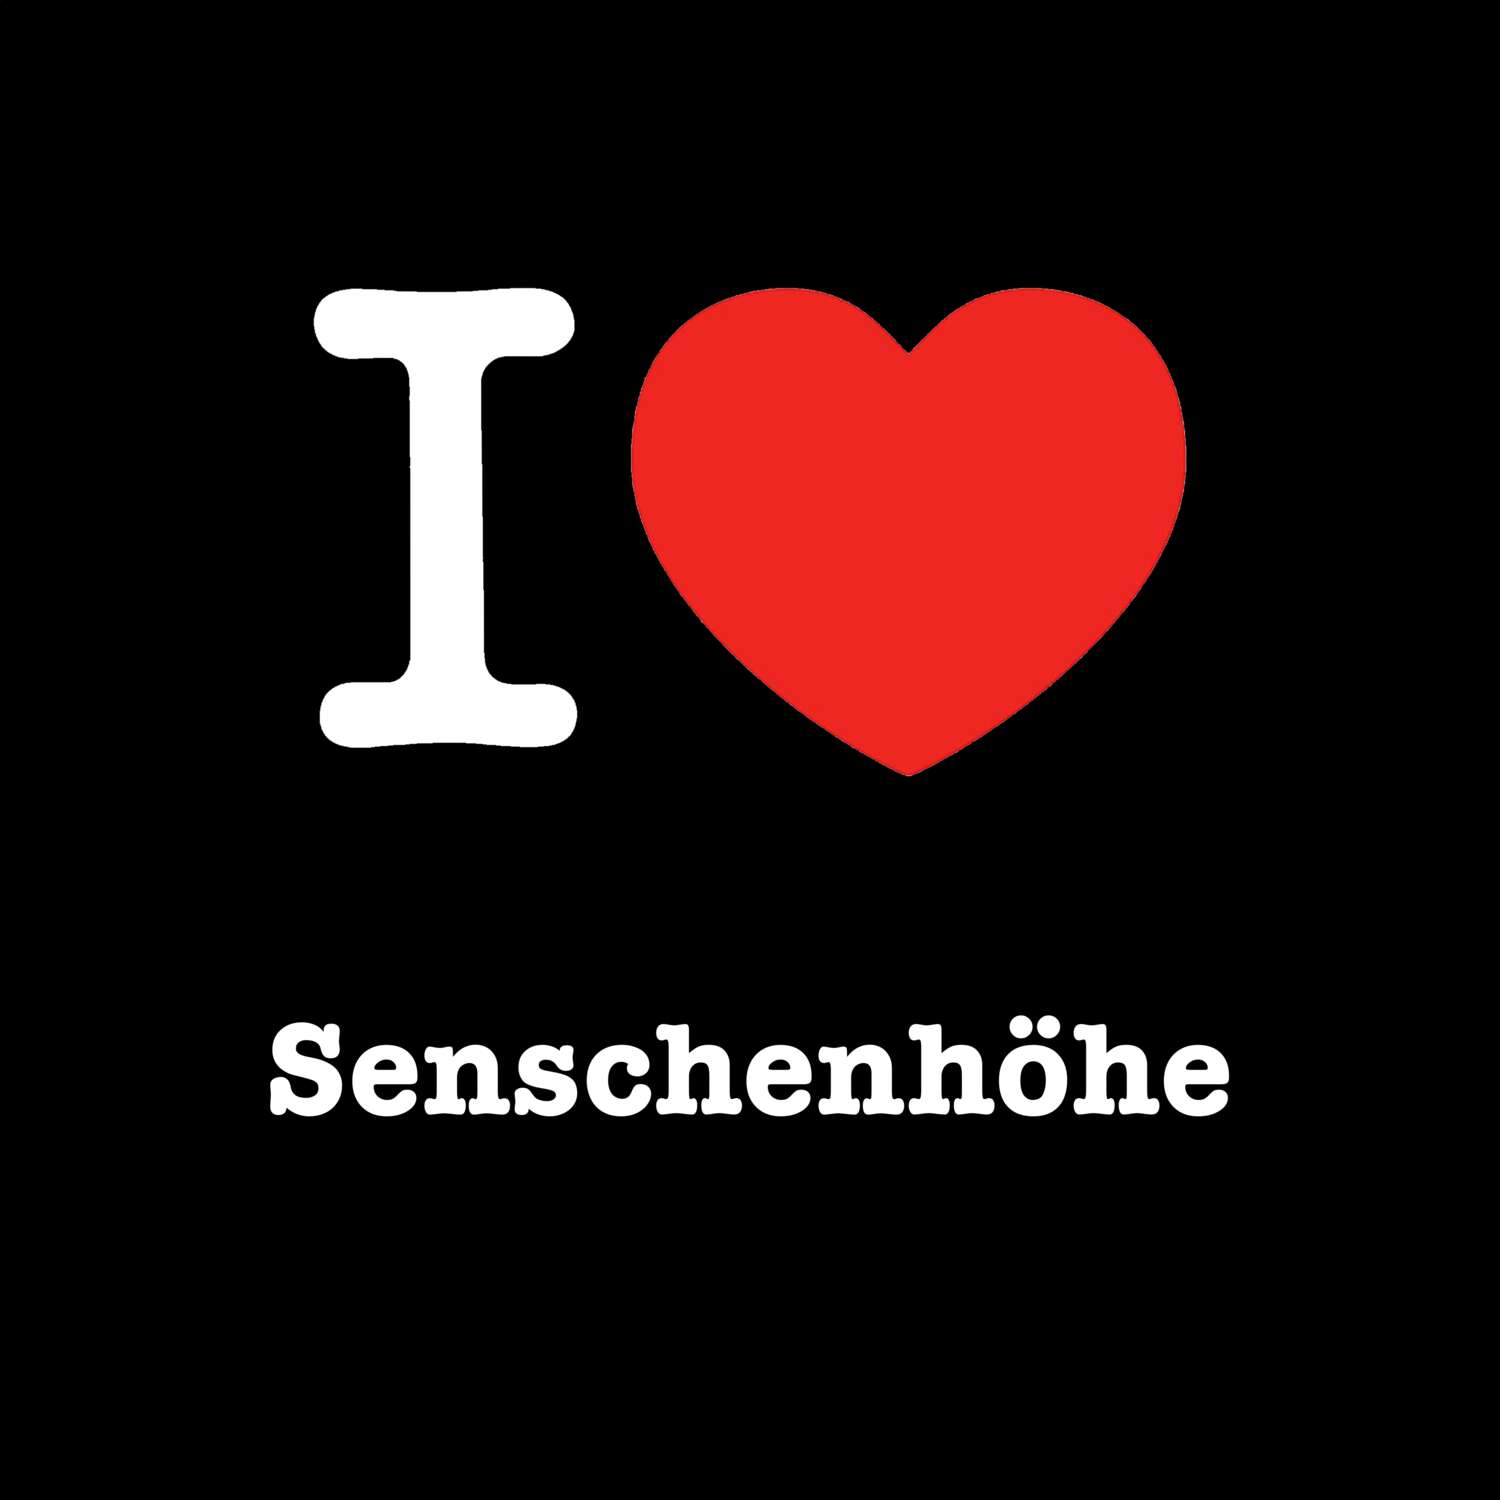 Senschenhöhe T-Shirt »I love«